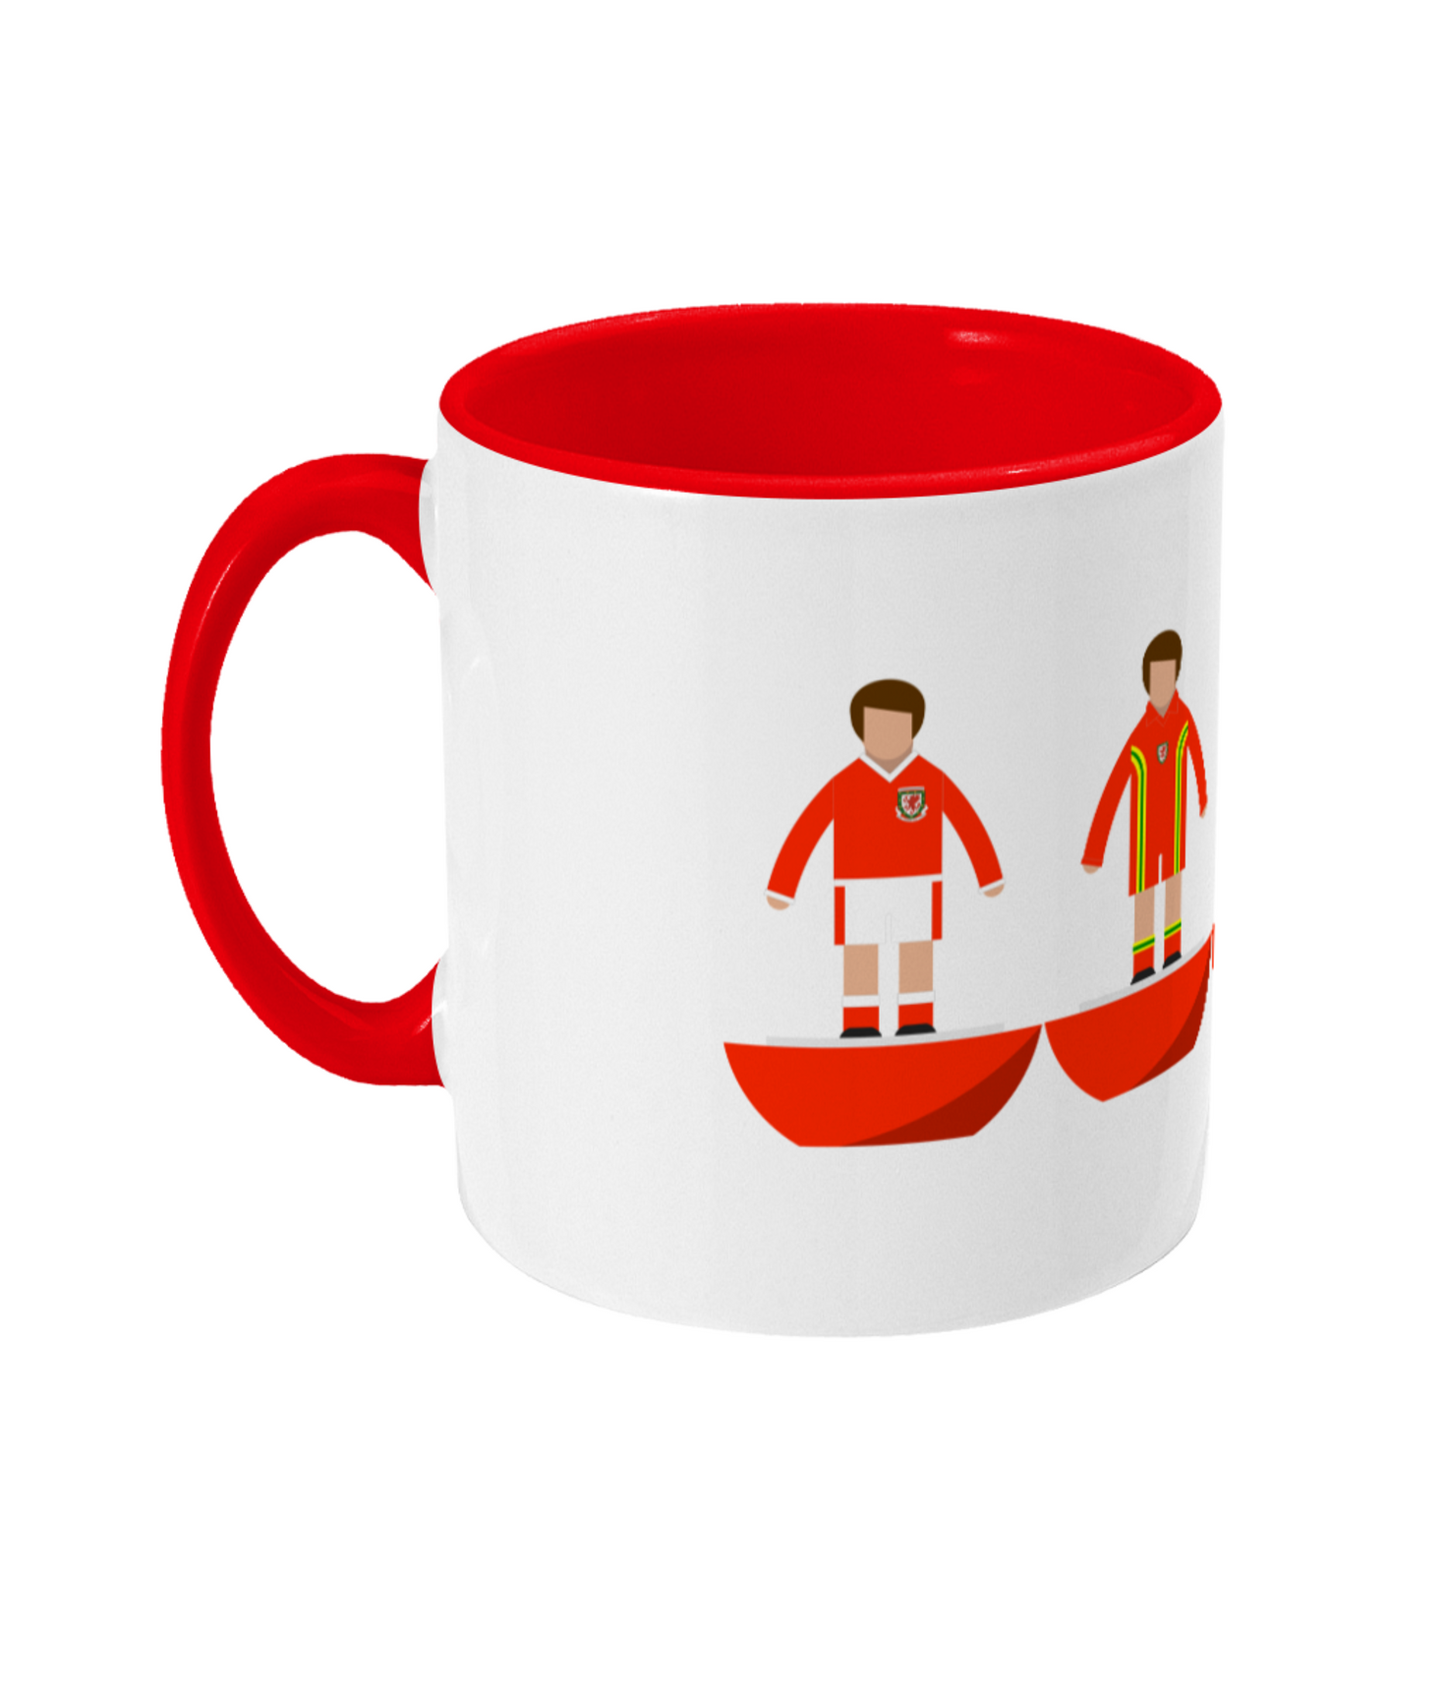 Football Kits 'Wales combined' Mug